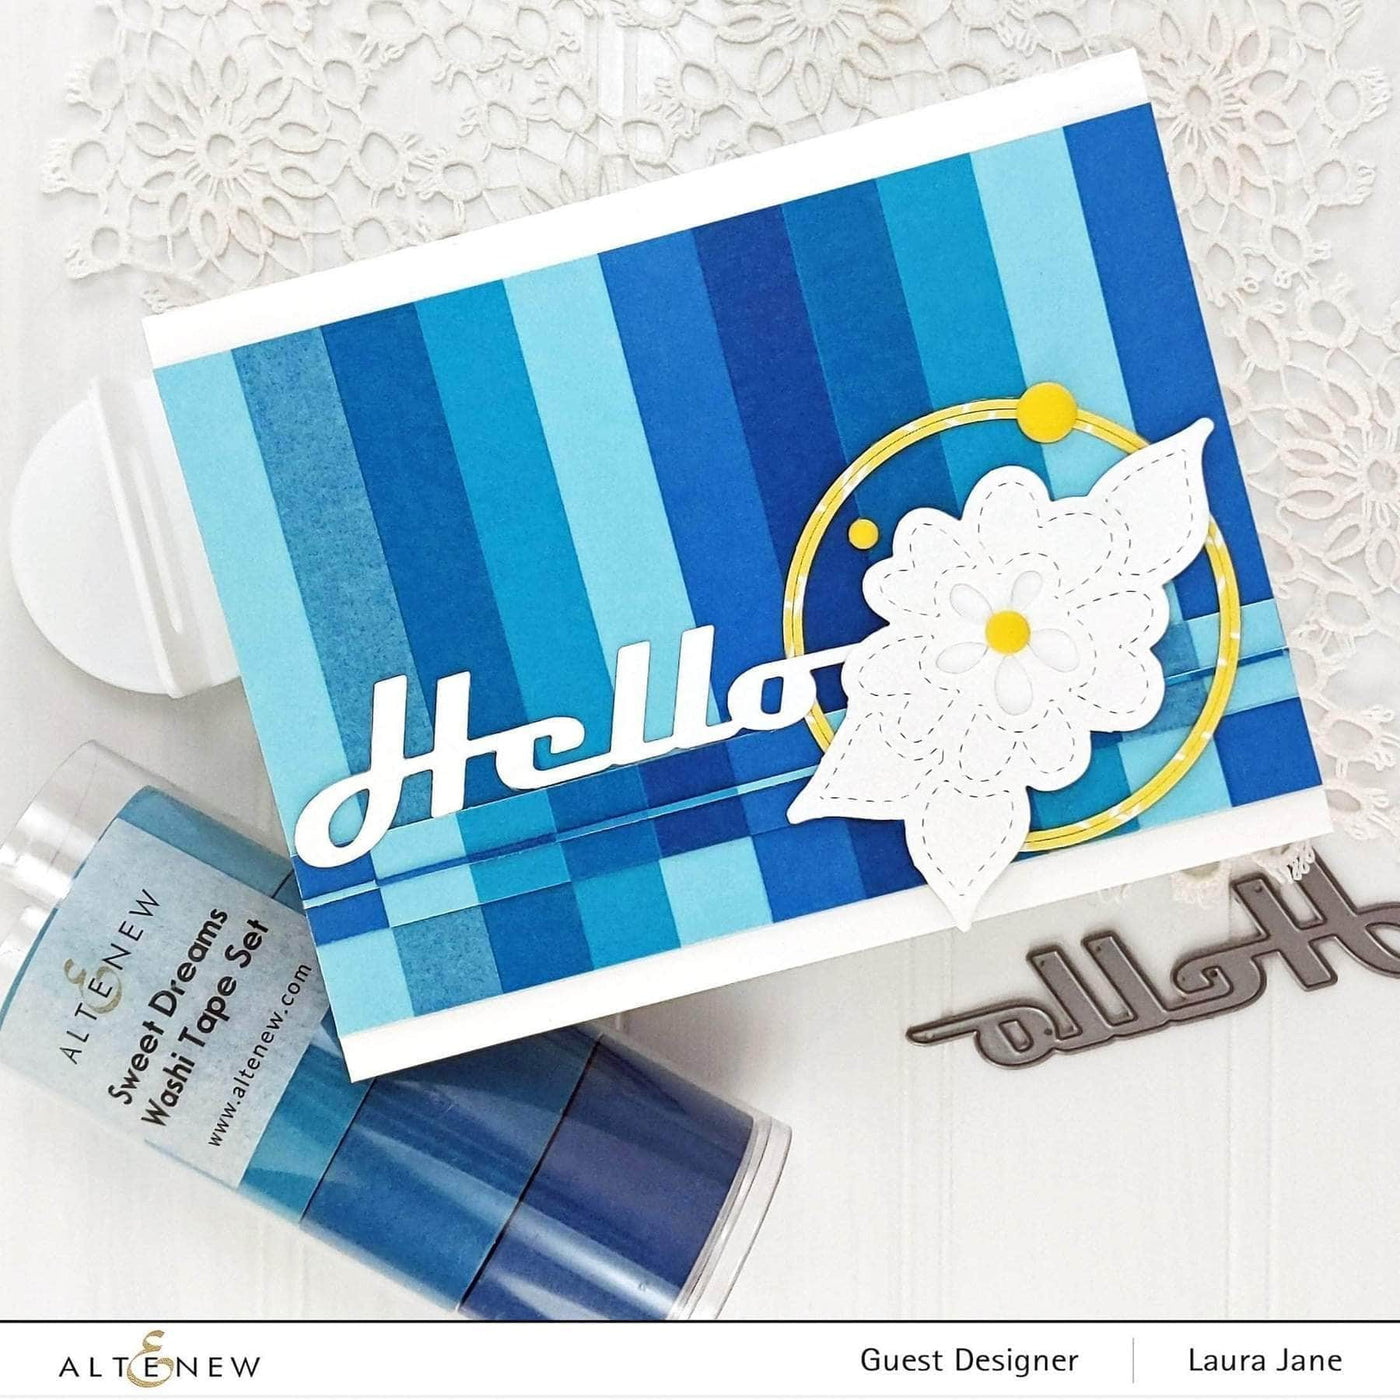 Altenew Creativity Kit Bundle Majestic Dreams Creativity Cardmaking Kit